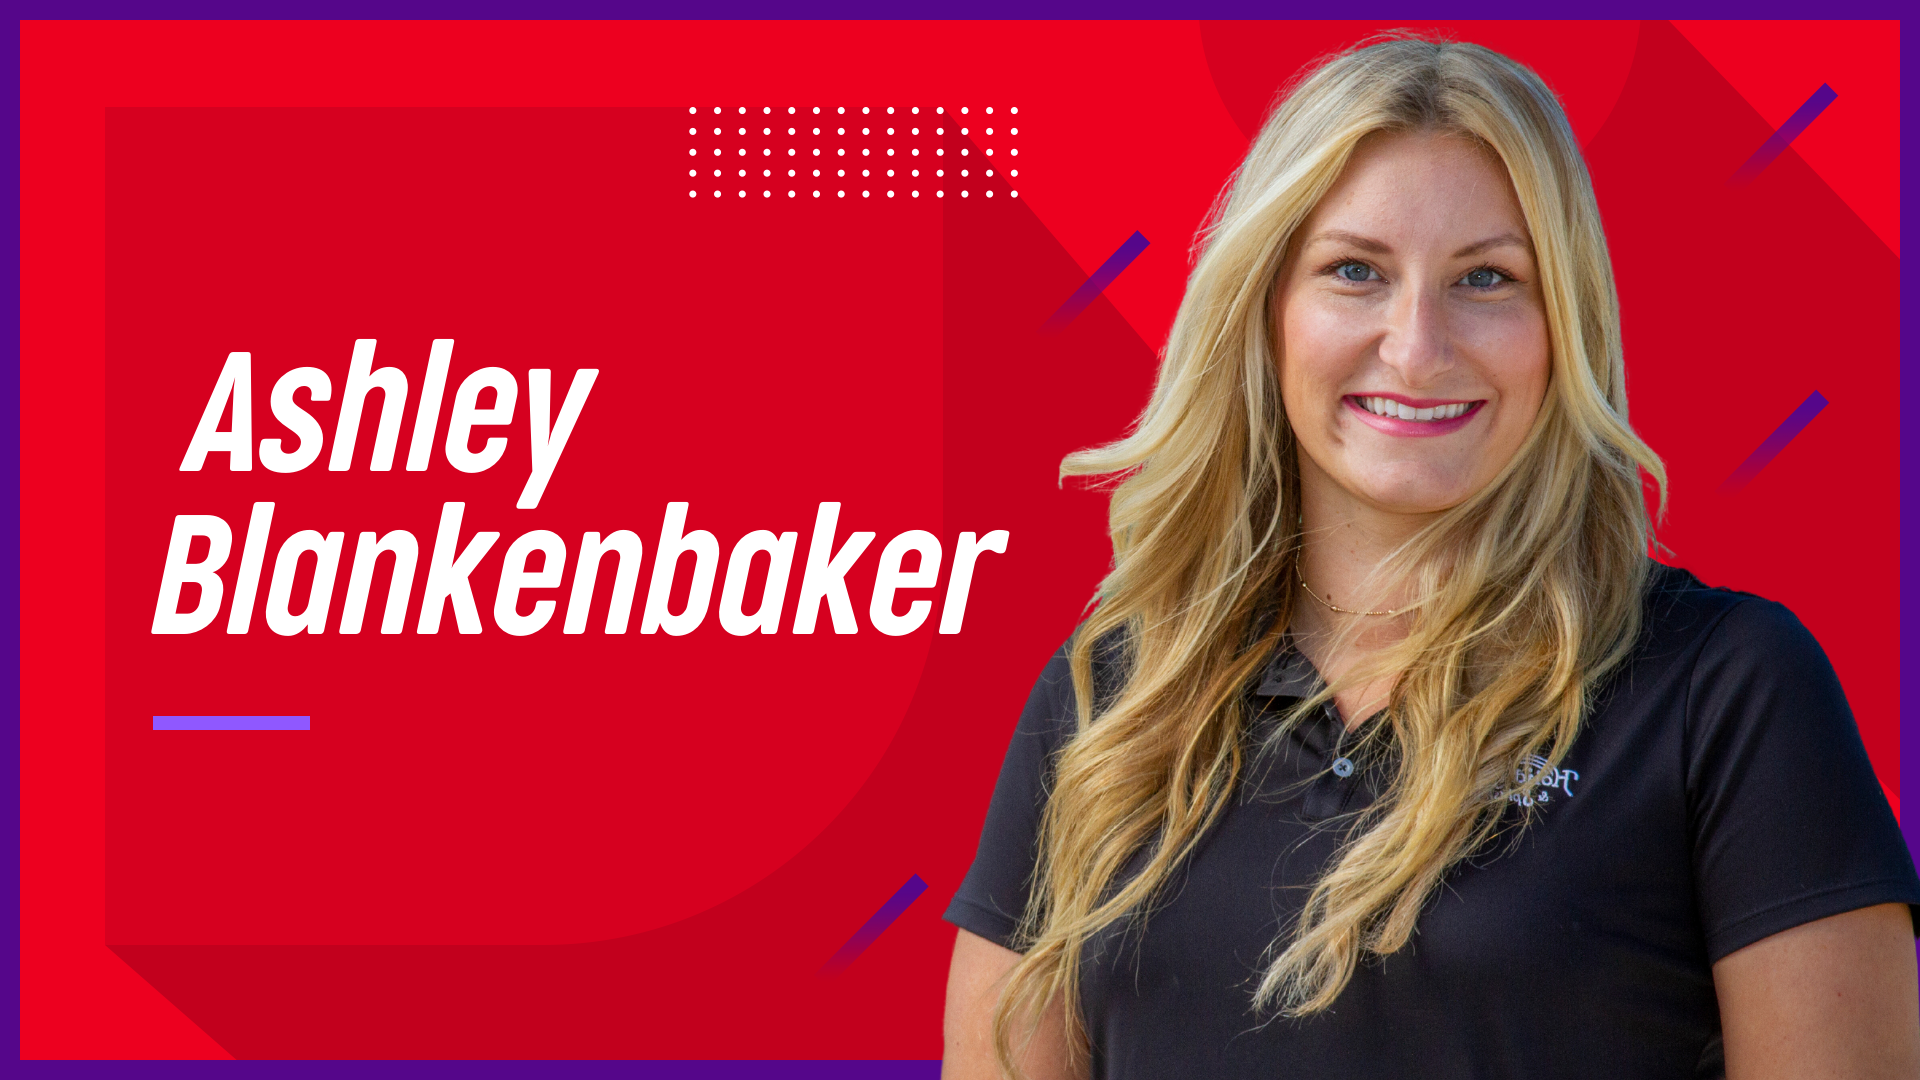 Ashley Blankenbaker, Director of Marketing at Holiday World